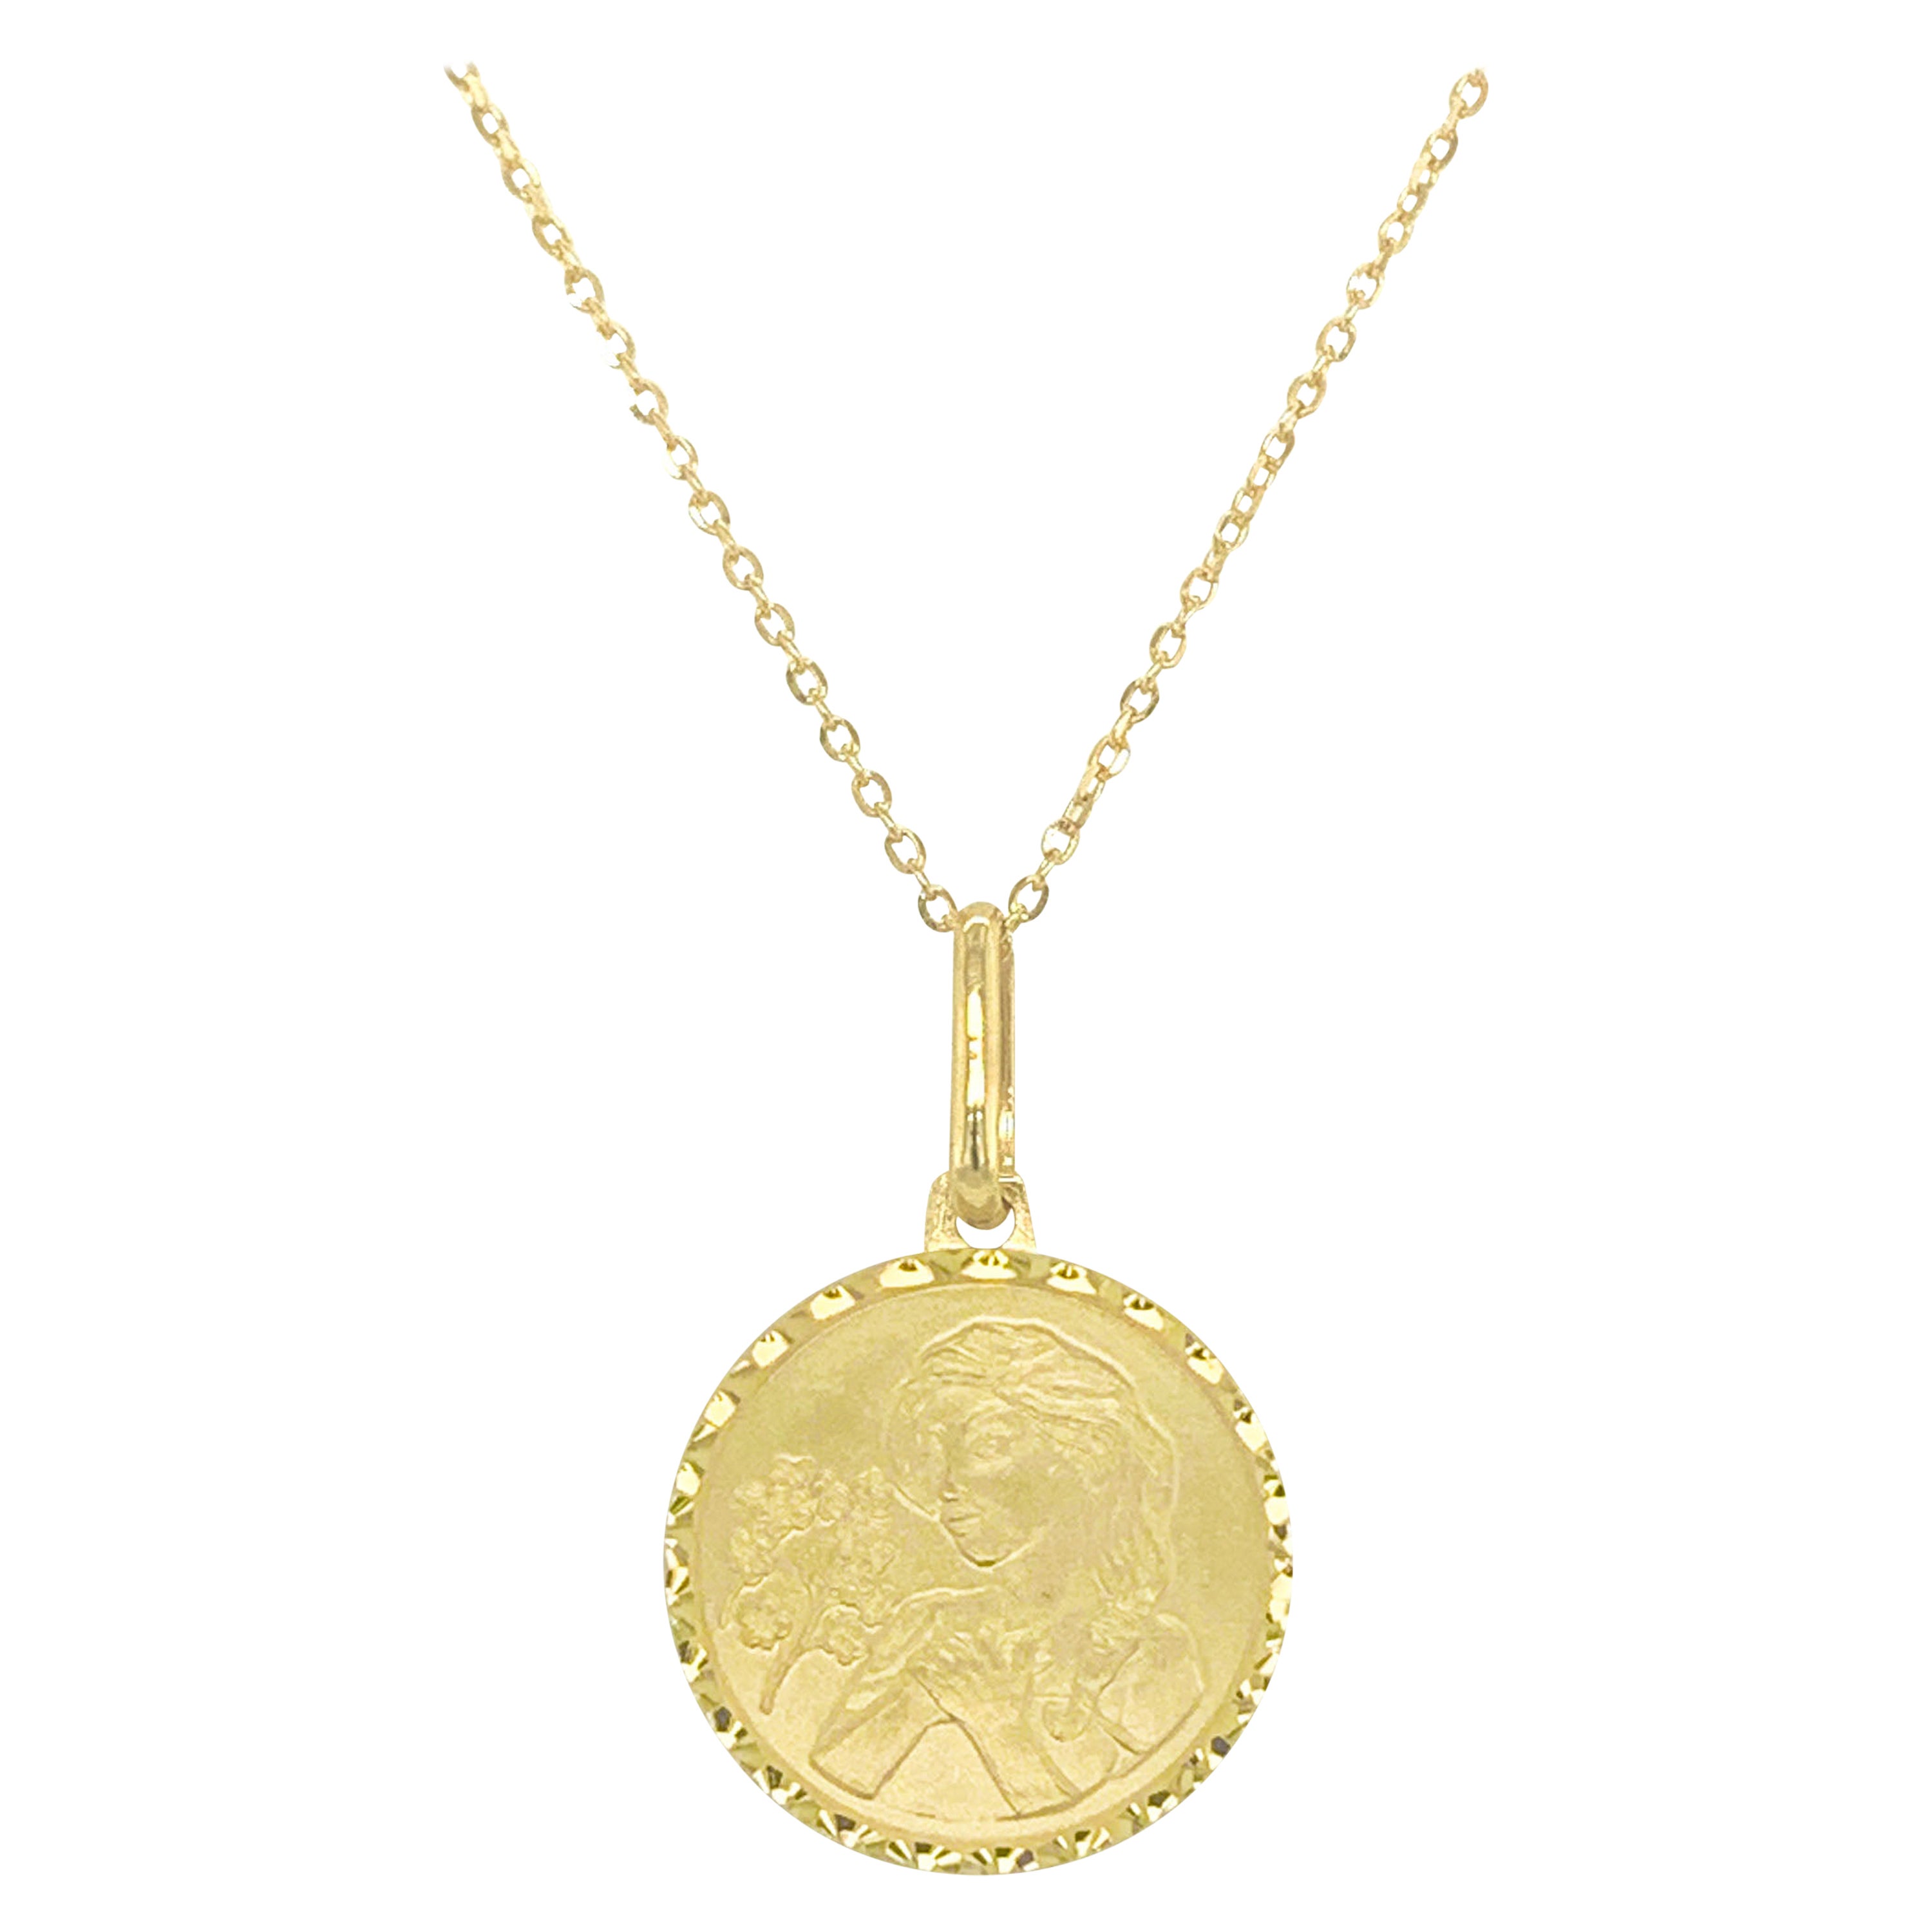 14k Yellow Gold Zodiac Pendant Necklace, Virgo